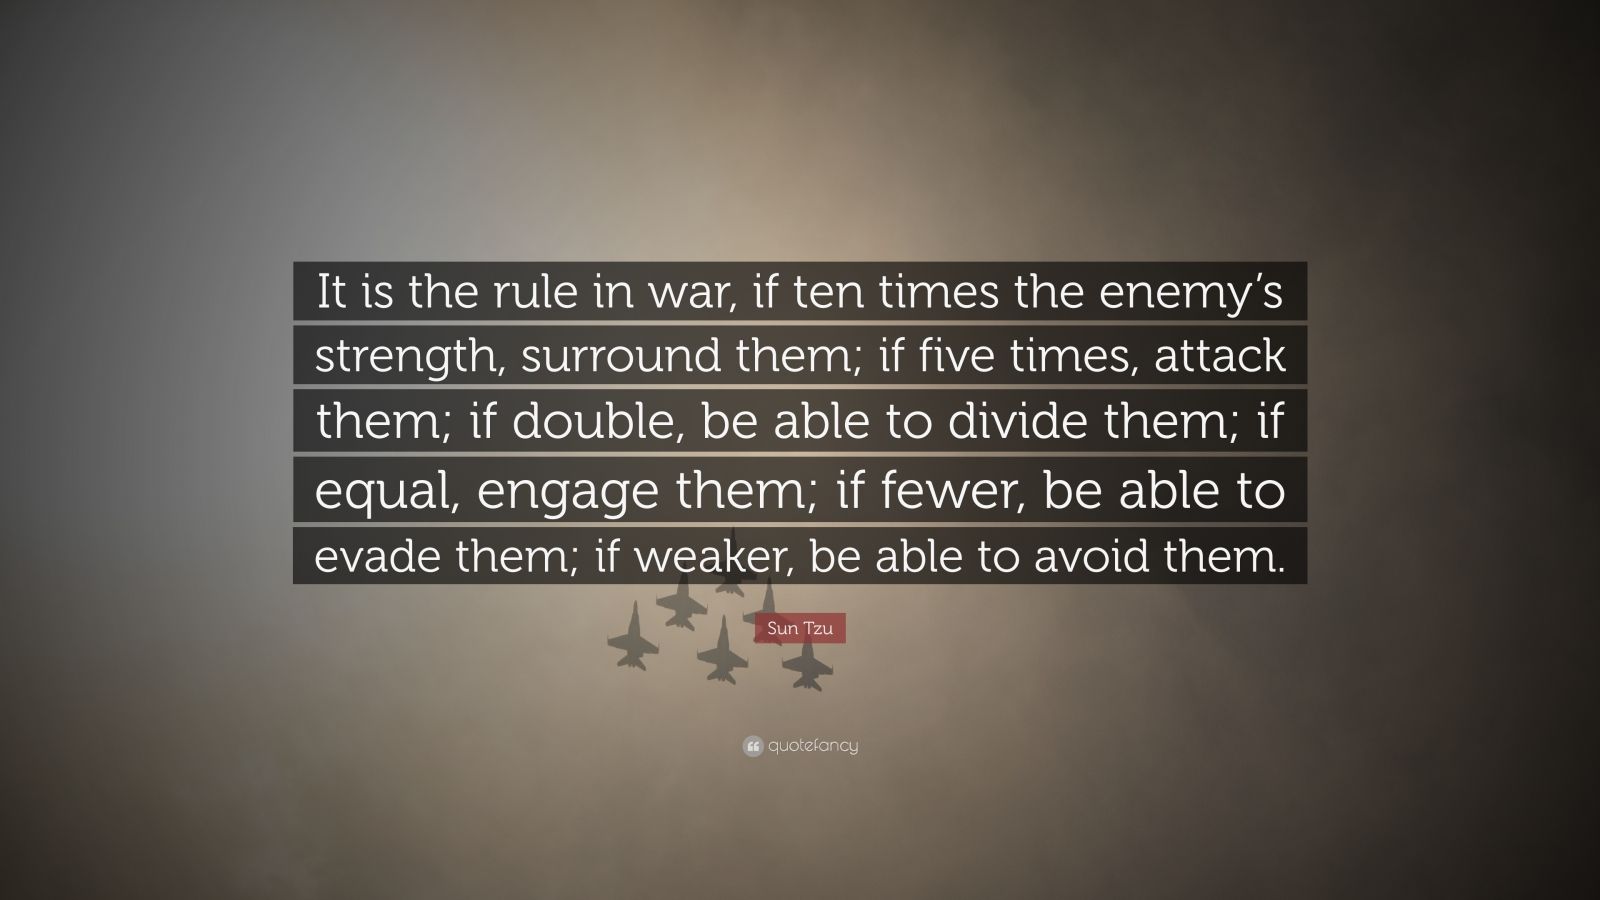 Sun Tzu Quote: “It is the rule in war, if ten times the enemy’s